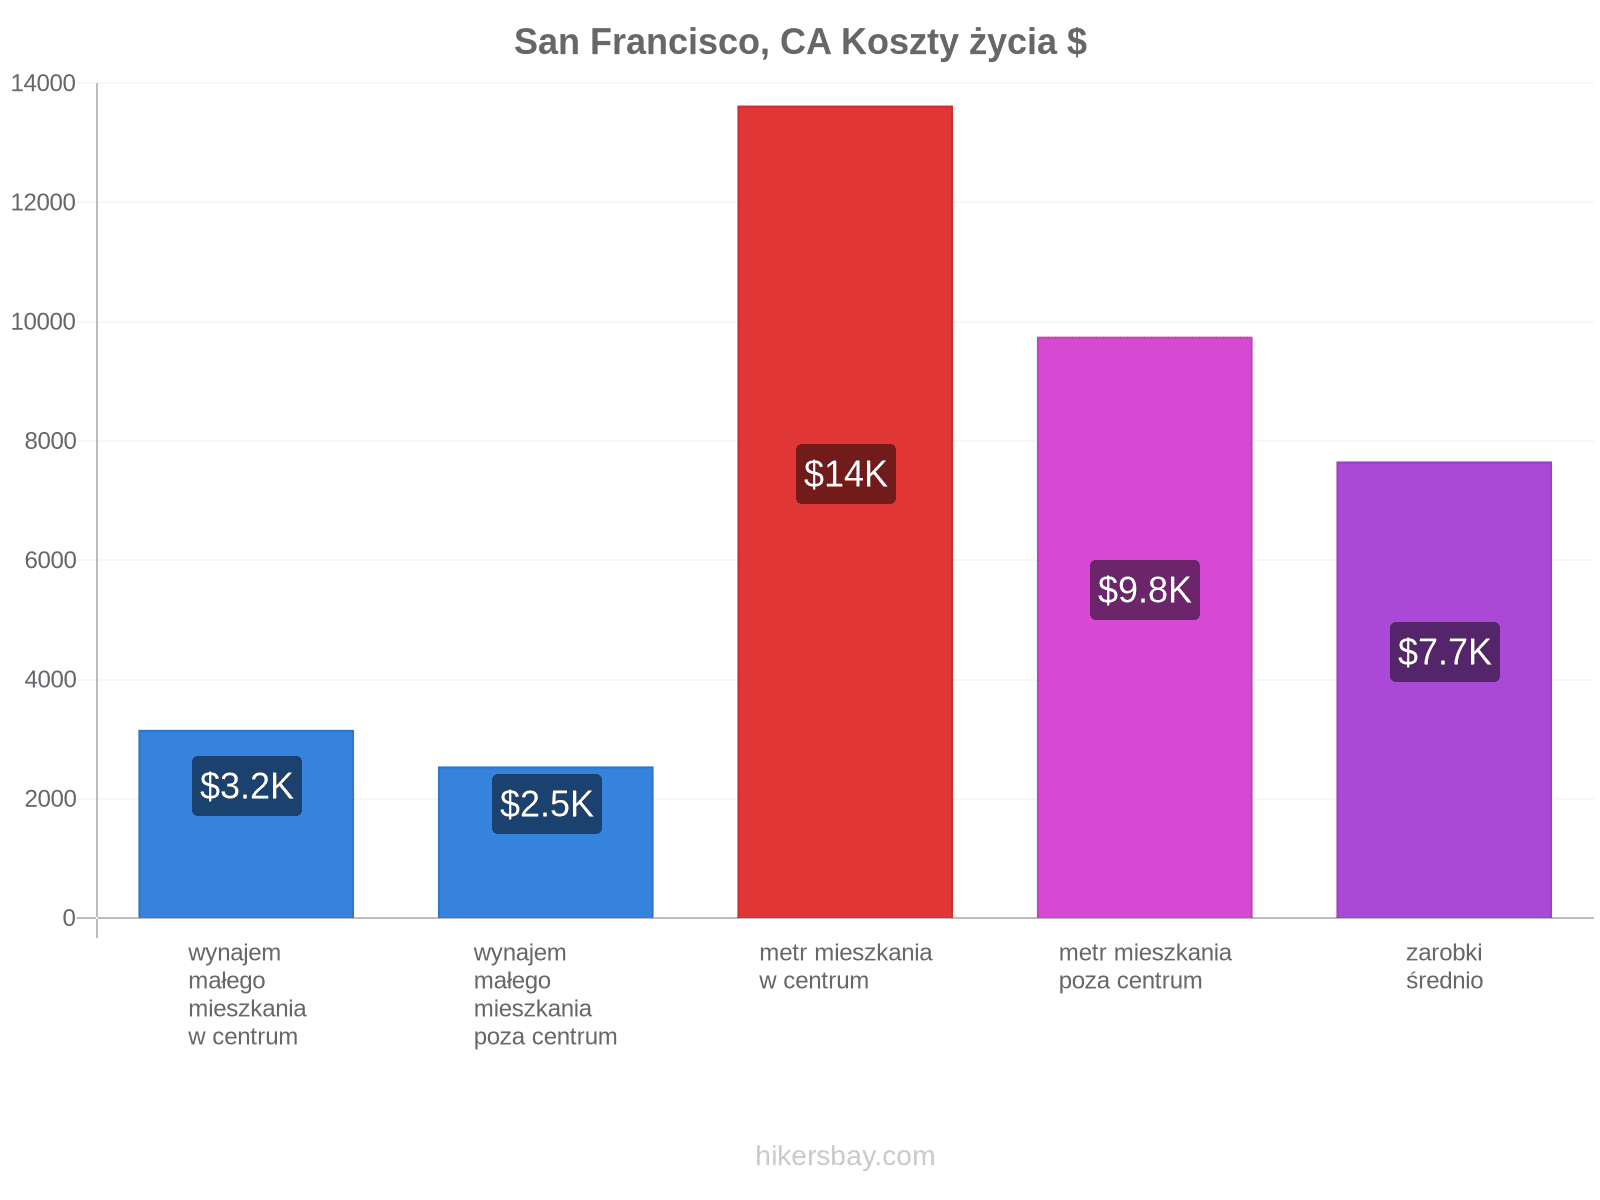 San Francisco, CA koszty życia hikersbay.com